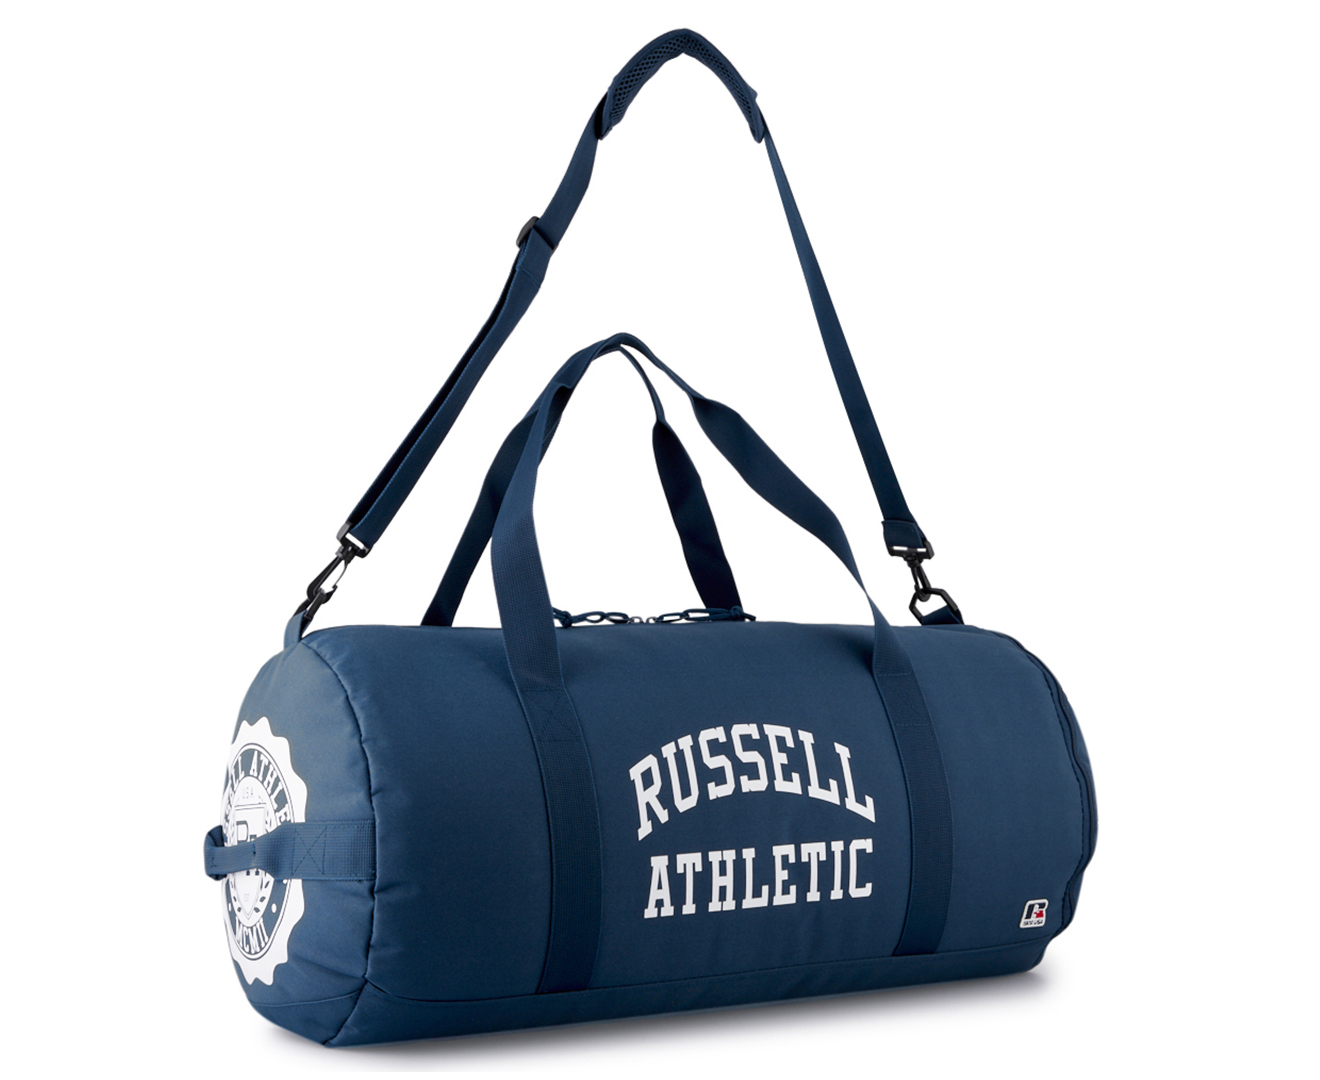 Russell Athletic  Barrel Bag / Duffle Bag - Navy